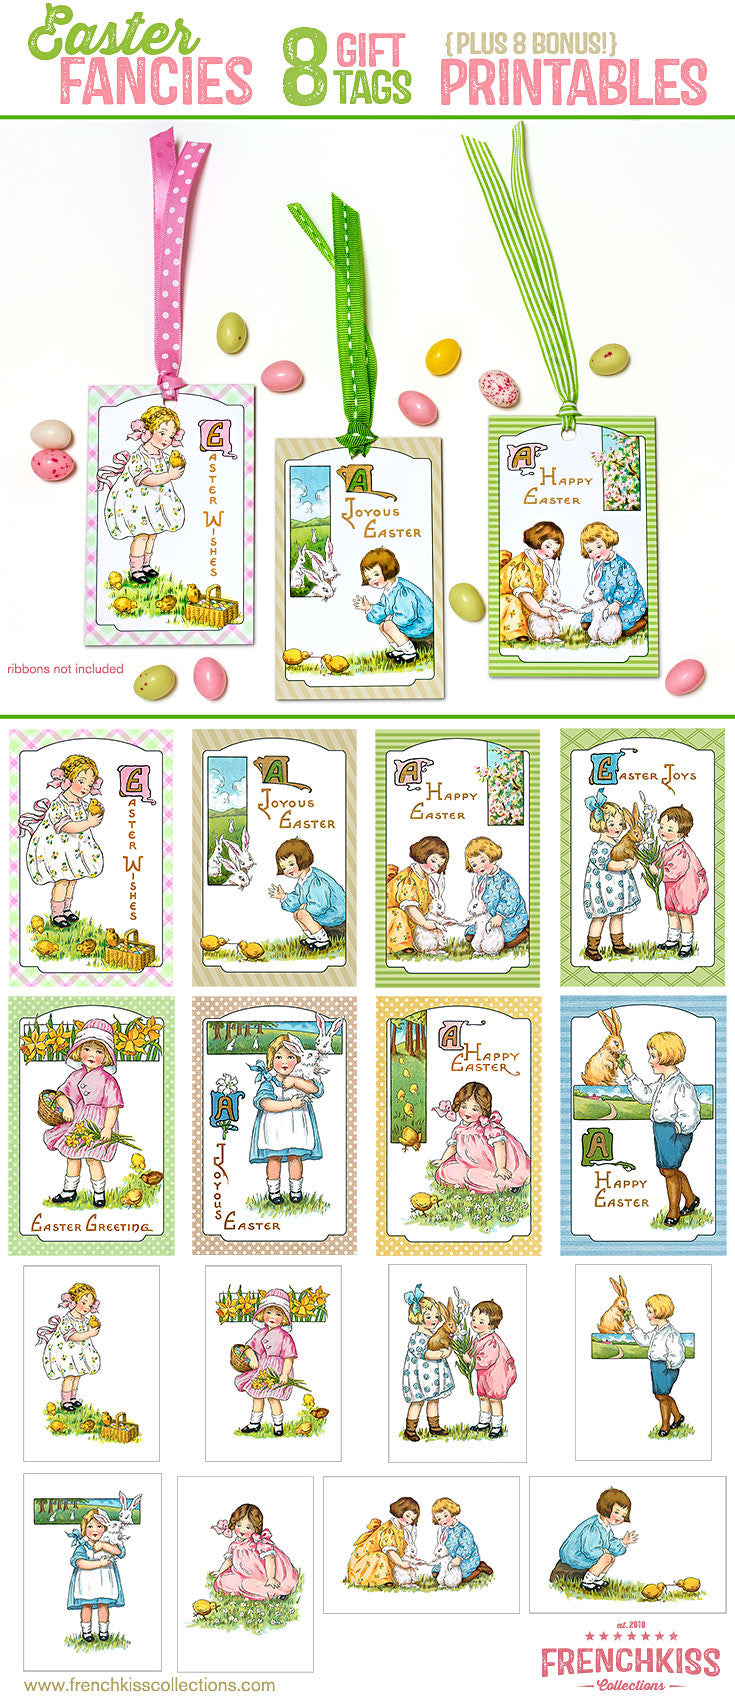 Easter Fancies vintage inspired printable gift tag download 2